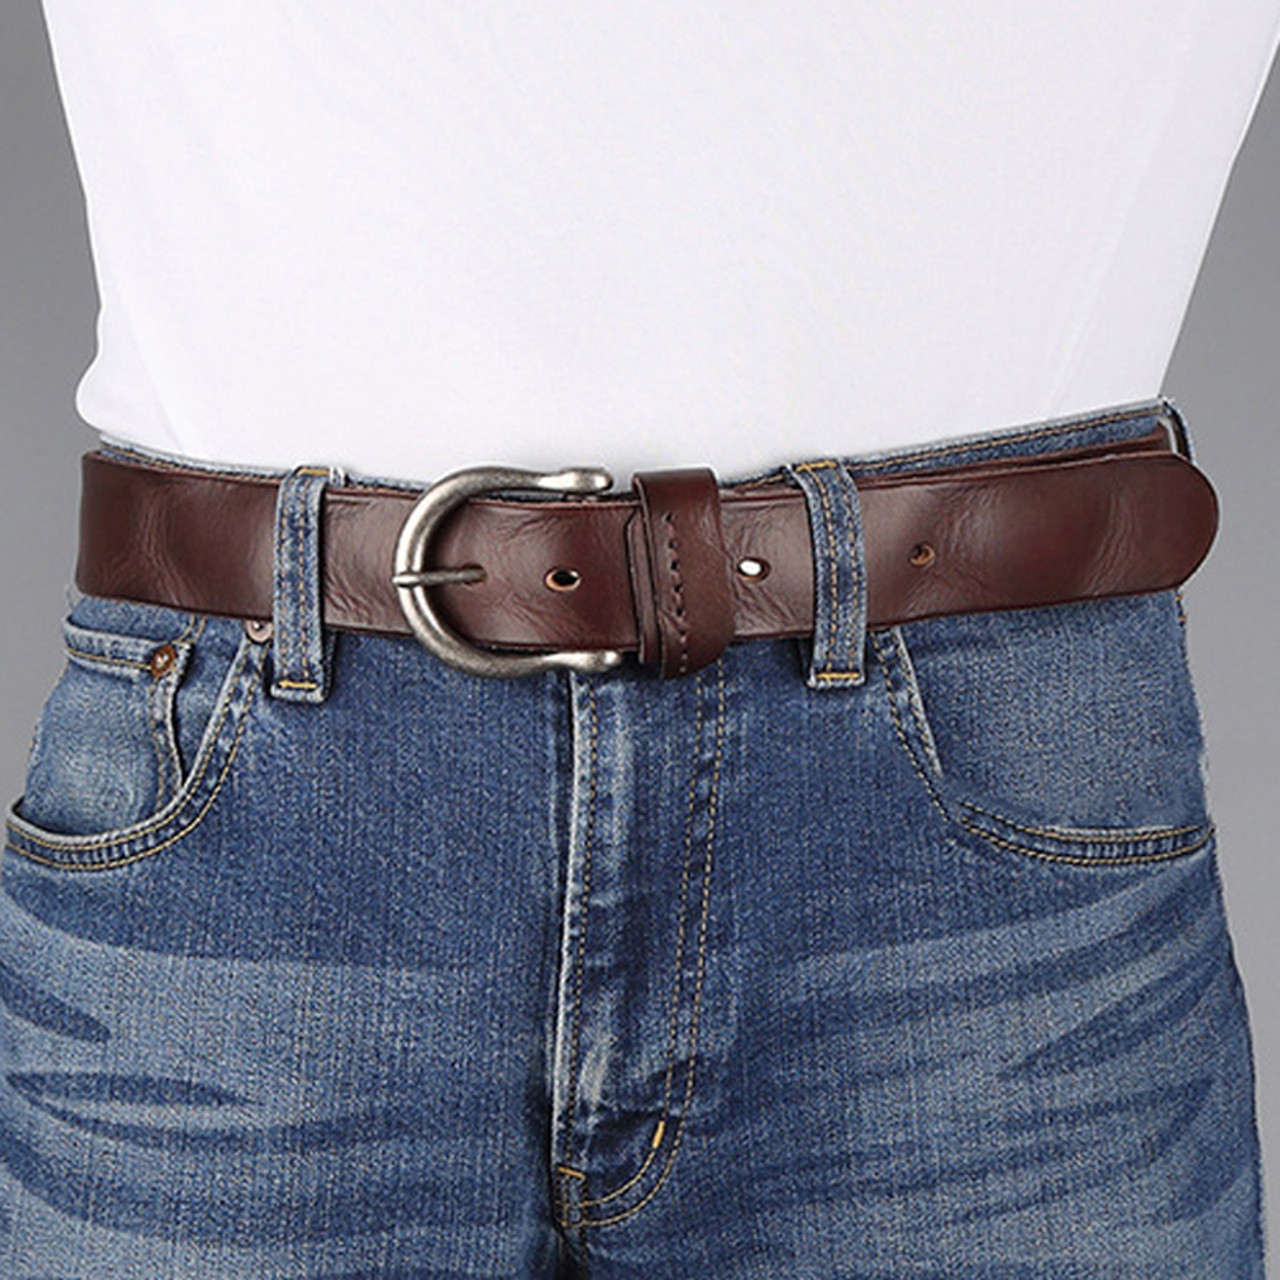 mens jeans belt buckle